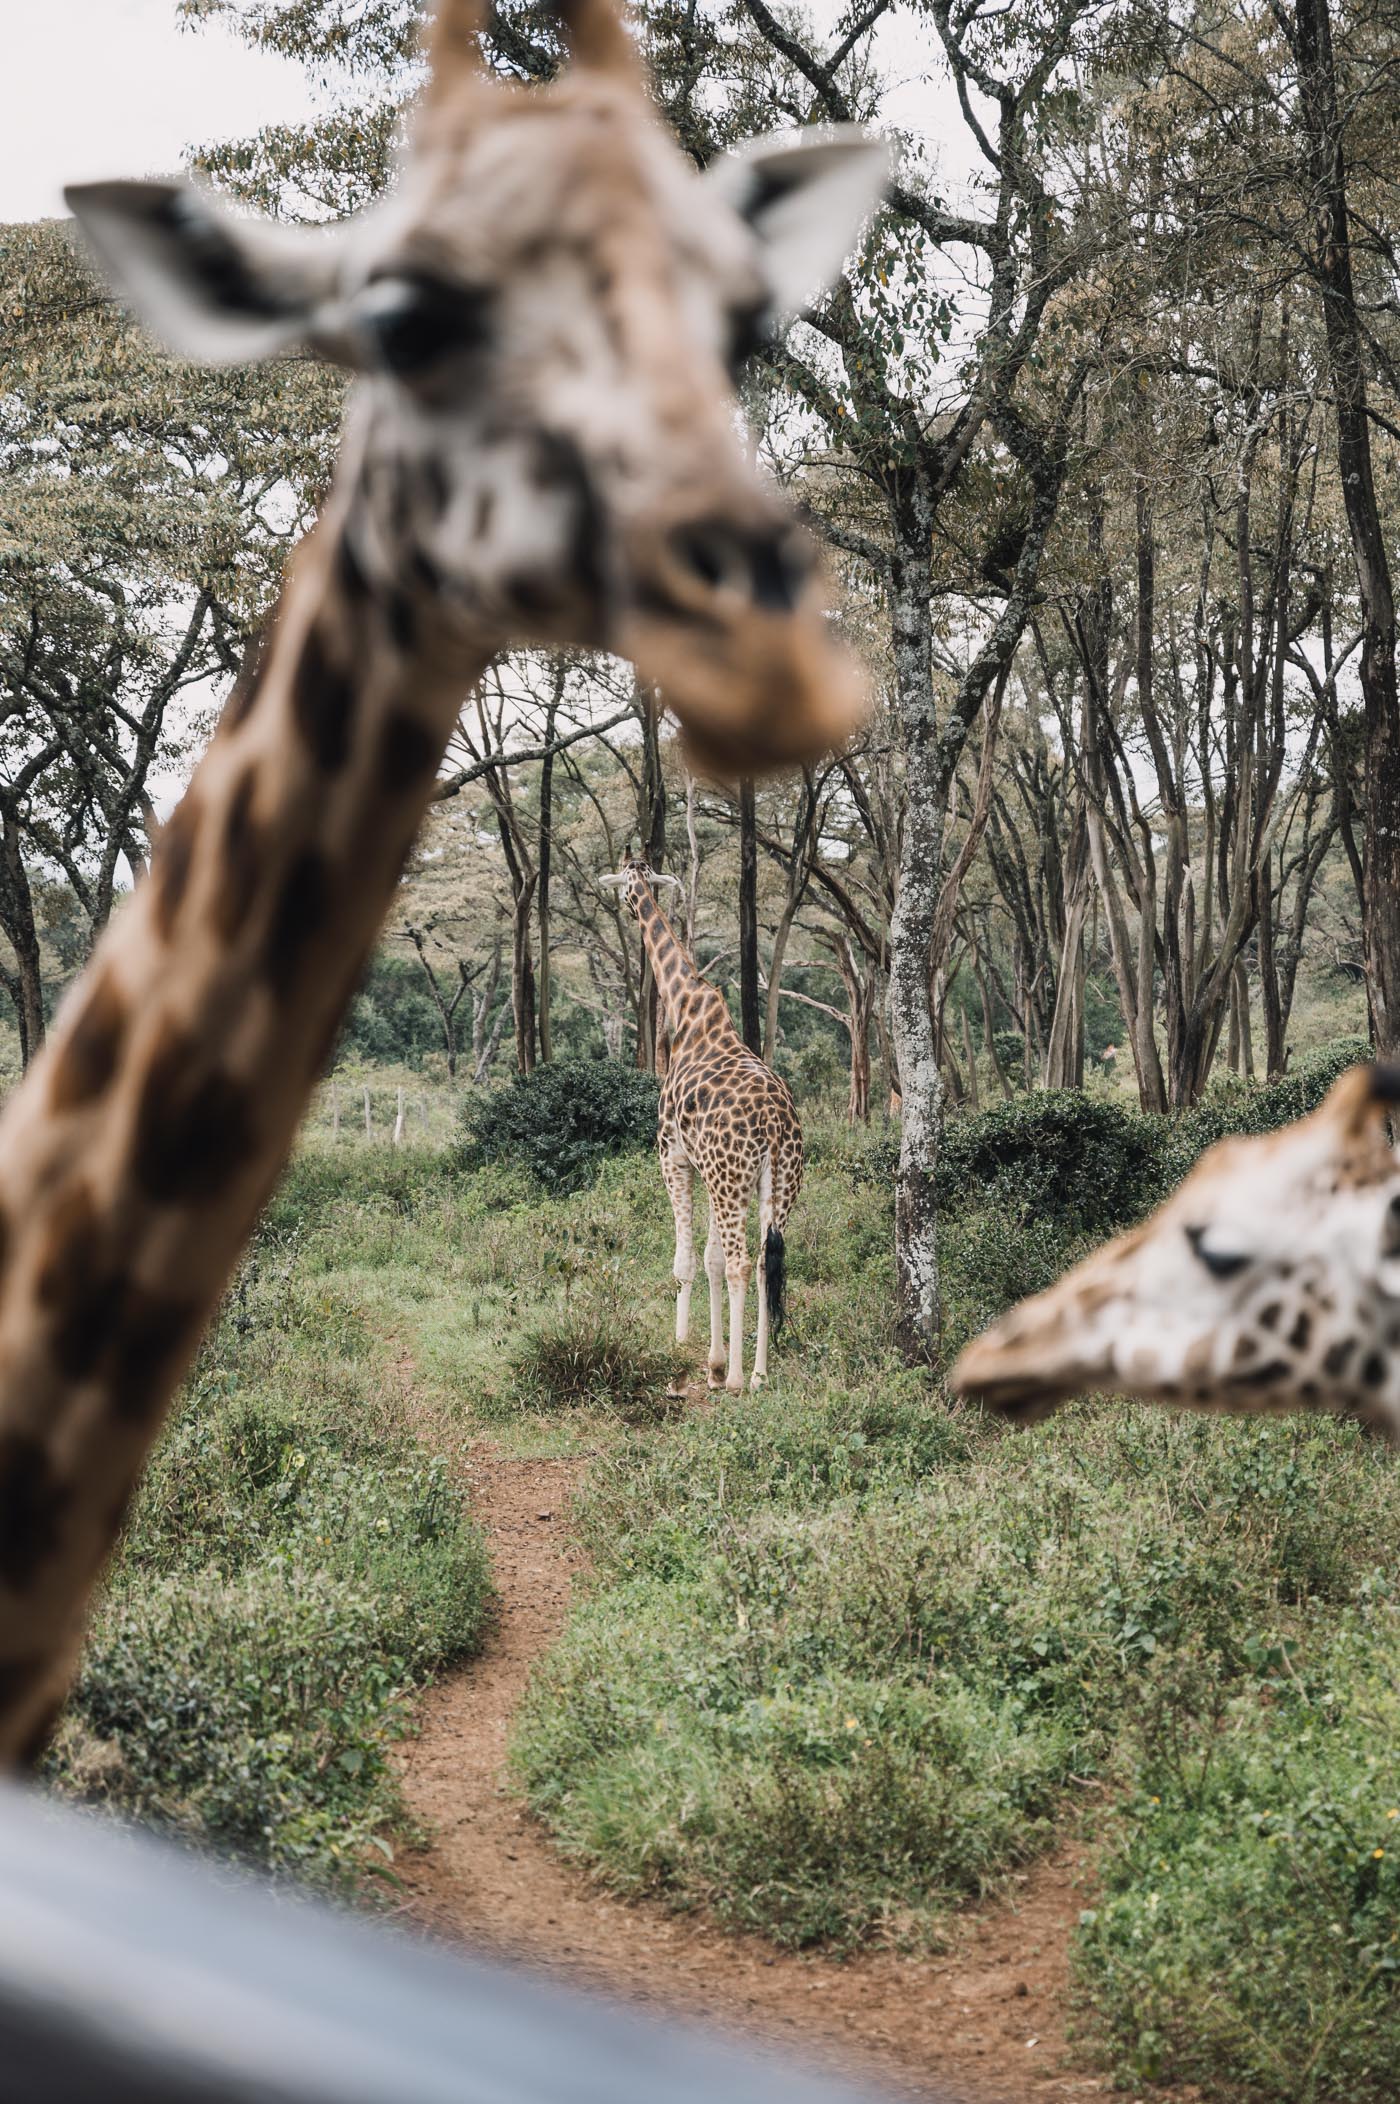 Giraffe centre Nairobi Kenya